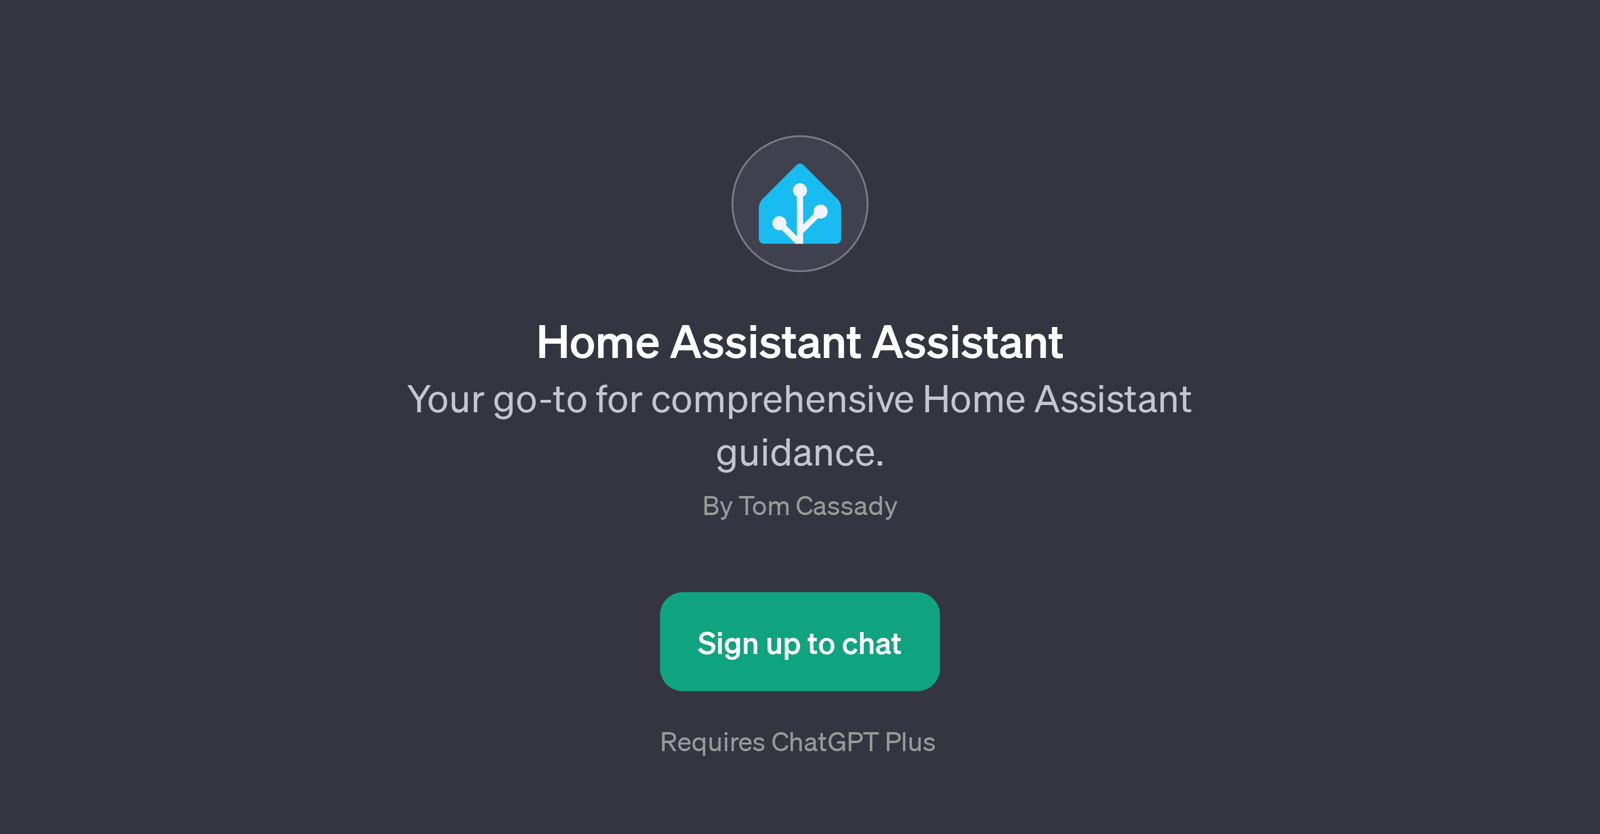 Home Assistant Assistant website